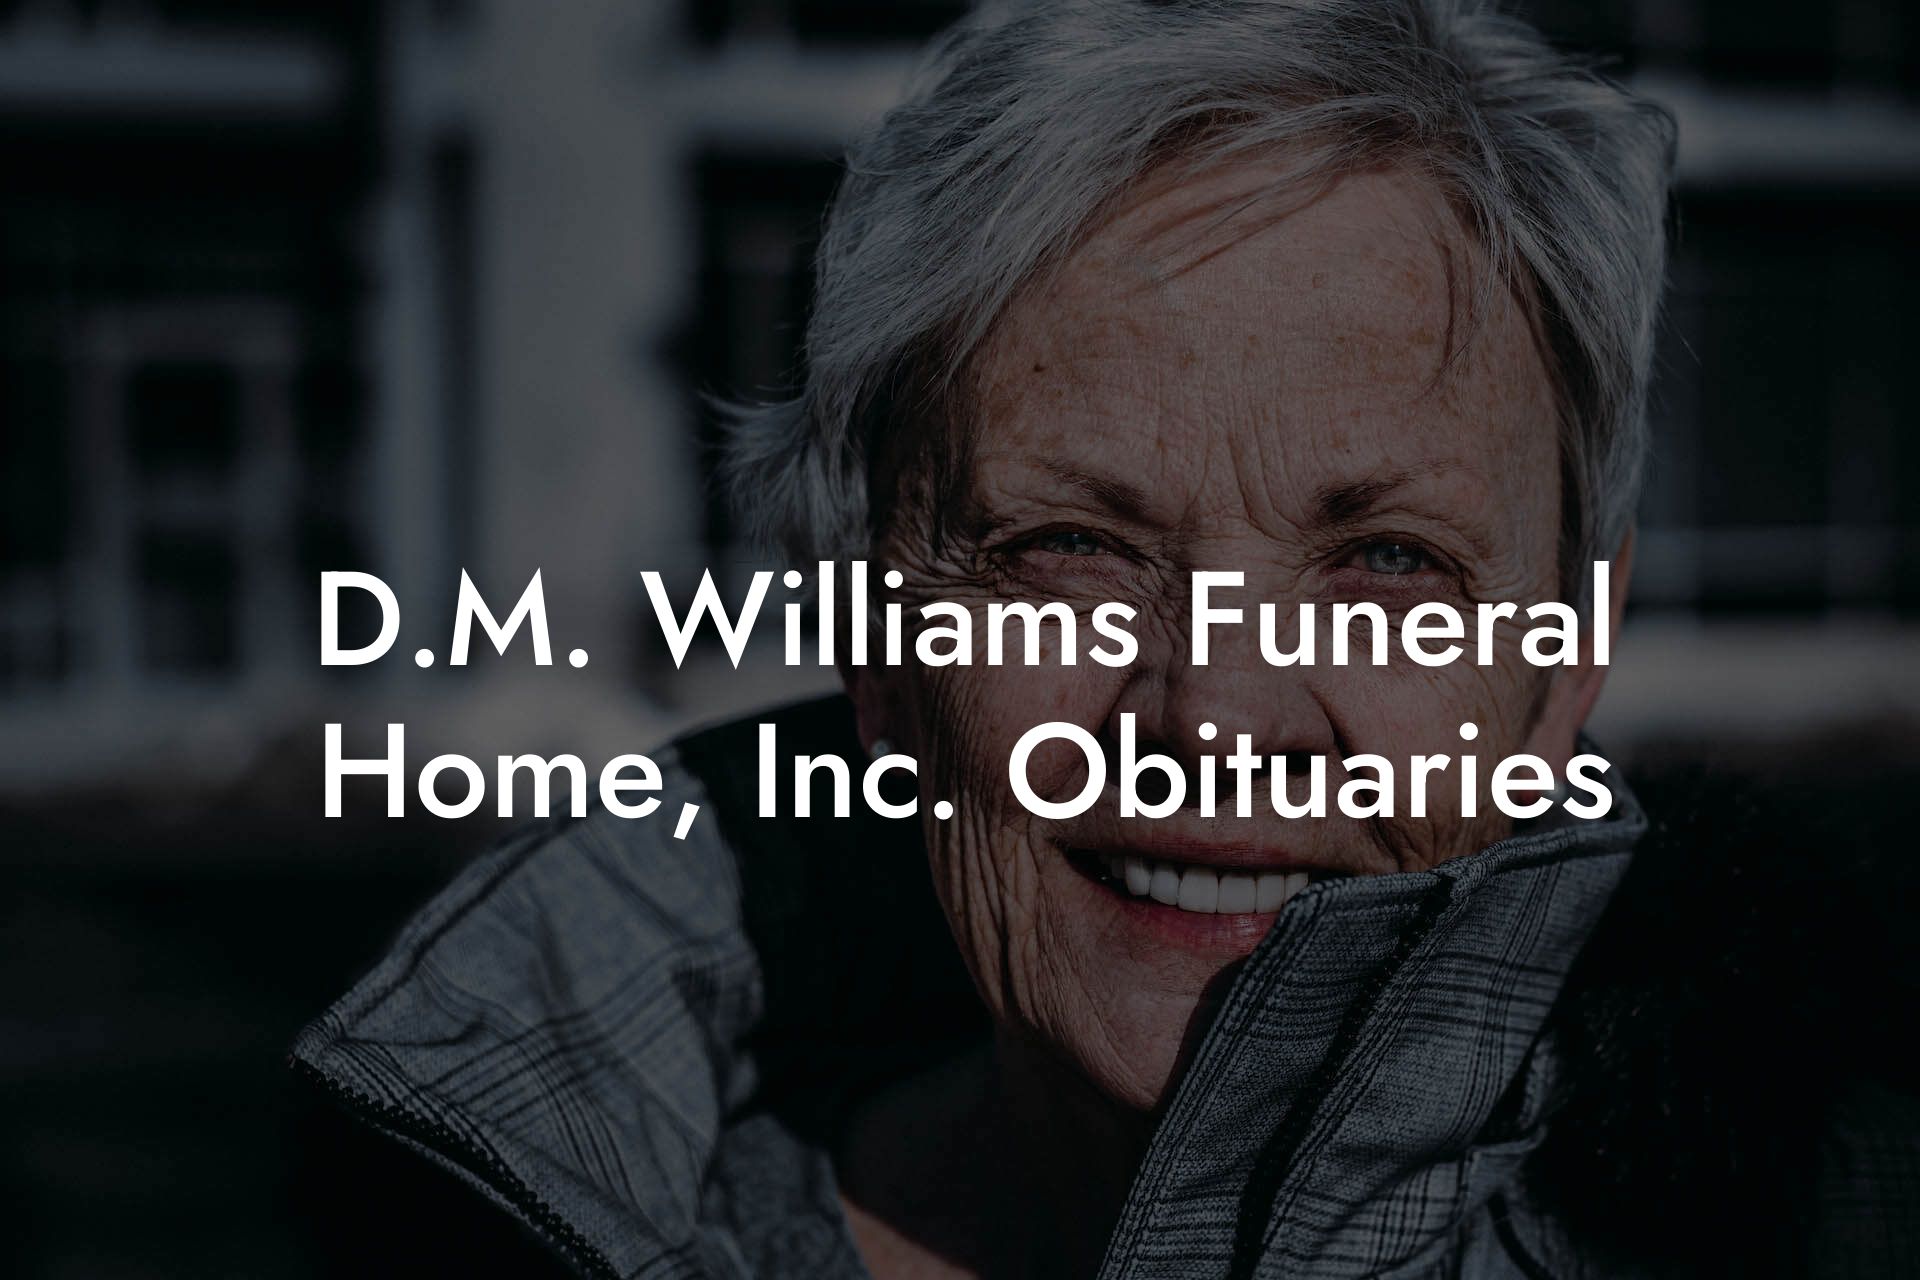 D.M. Williams Funeral Home, Inc. Obituaries